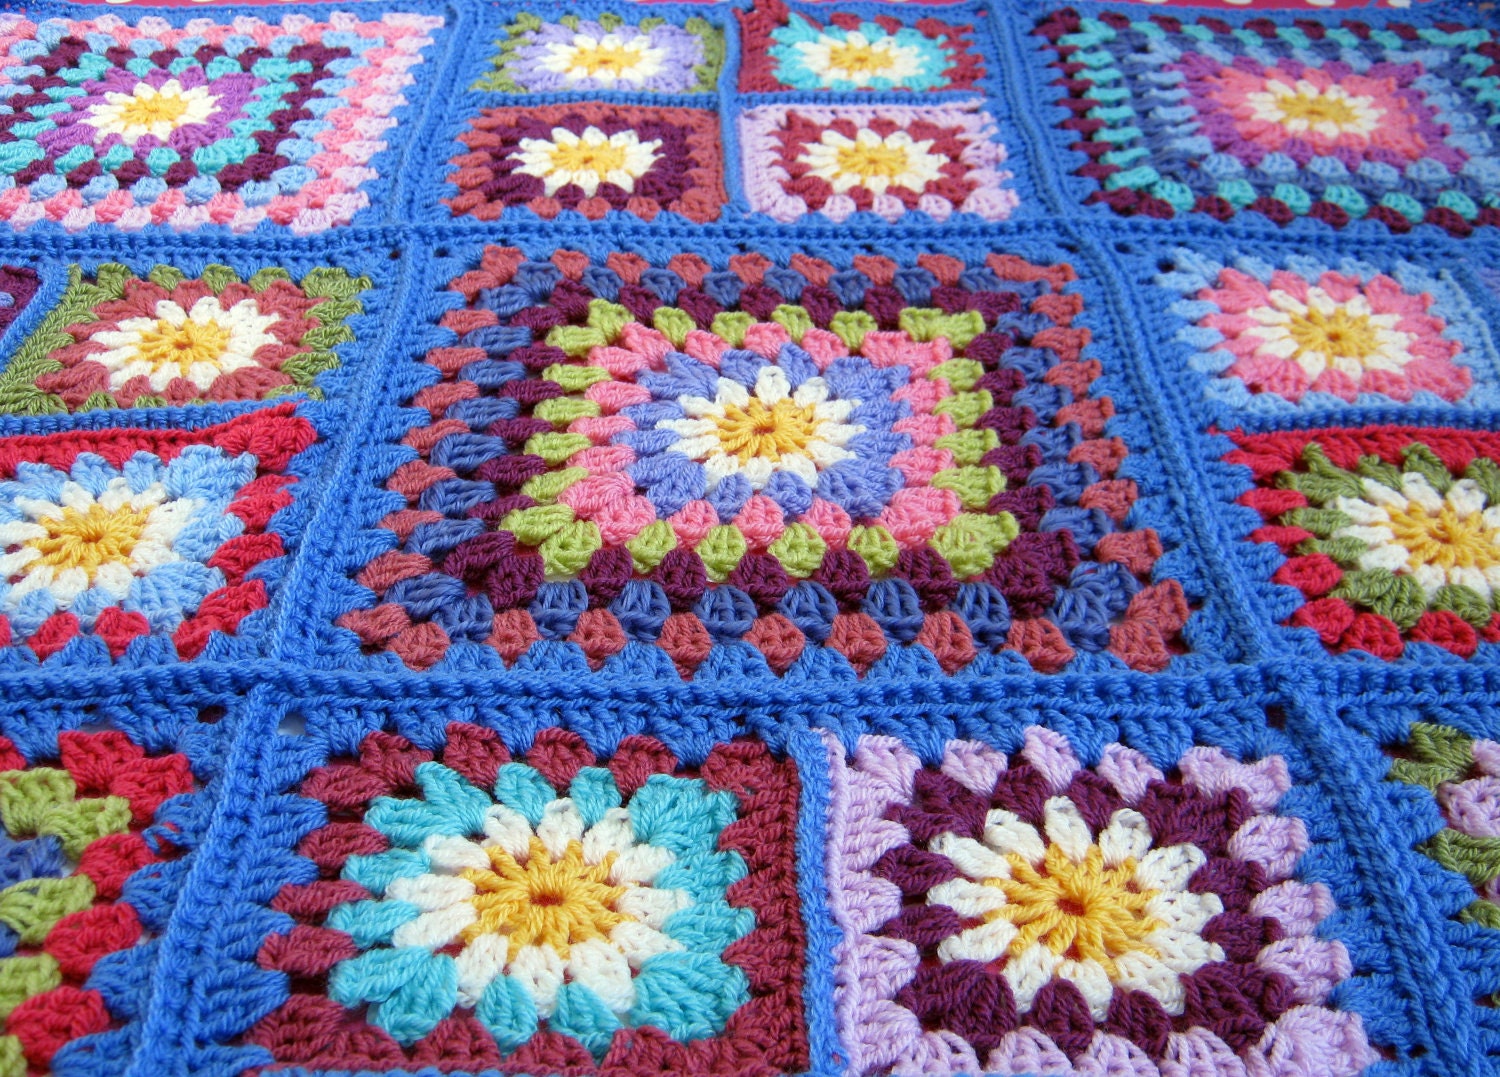 Daisy Granny Square Crochet Blanket Retro Style by Thesunroomuk